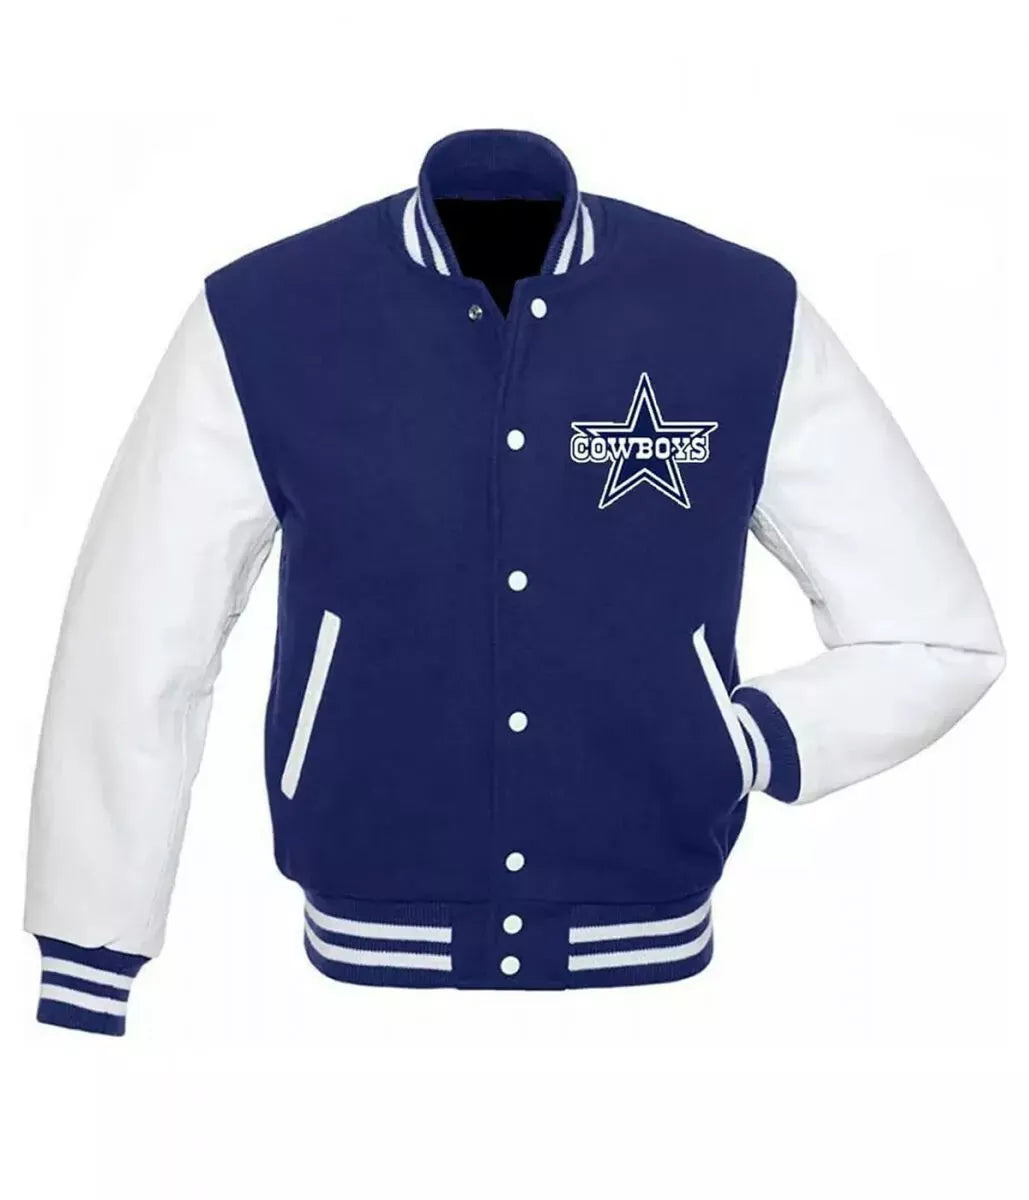 Letterman Dallas Cowboys Blue and White Varsity Jacket